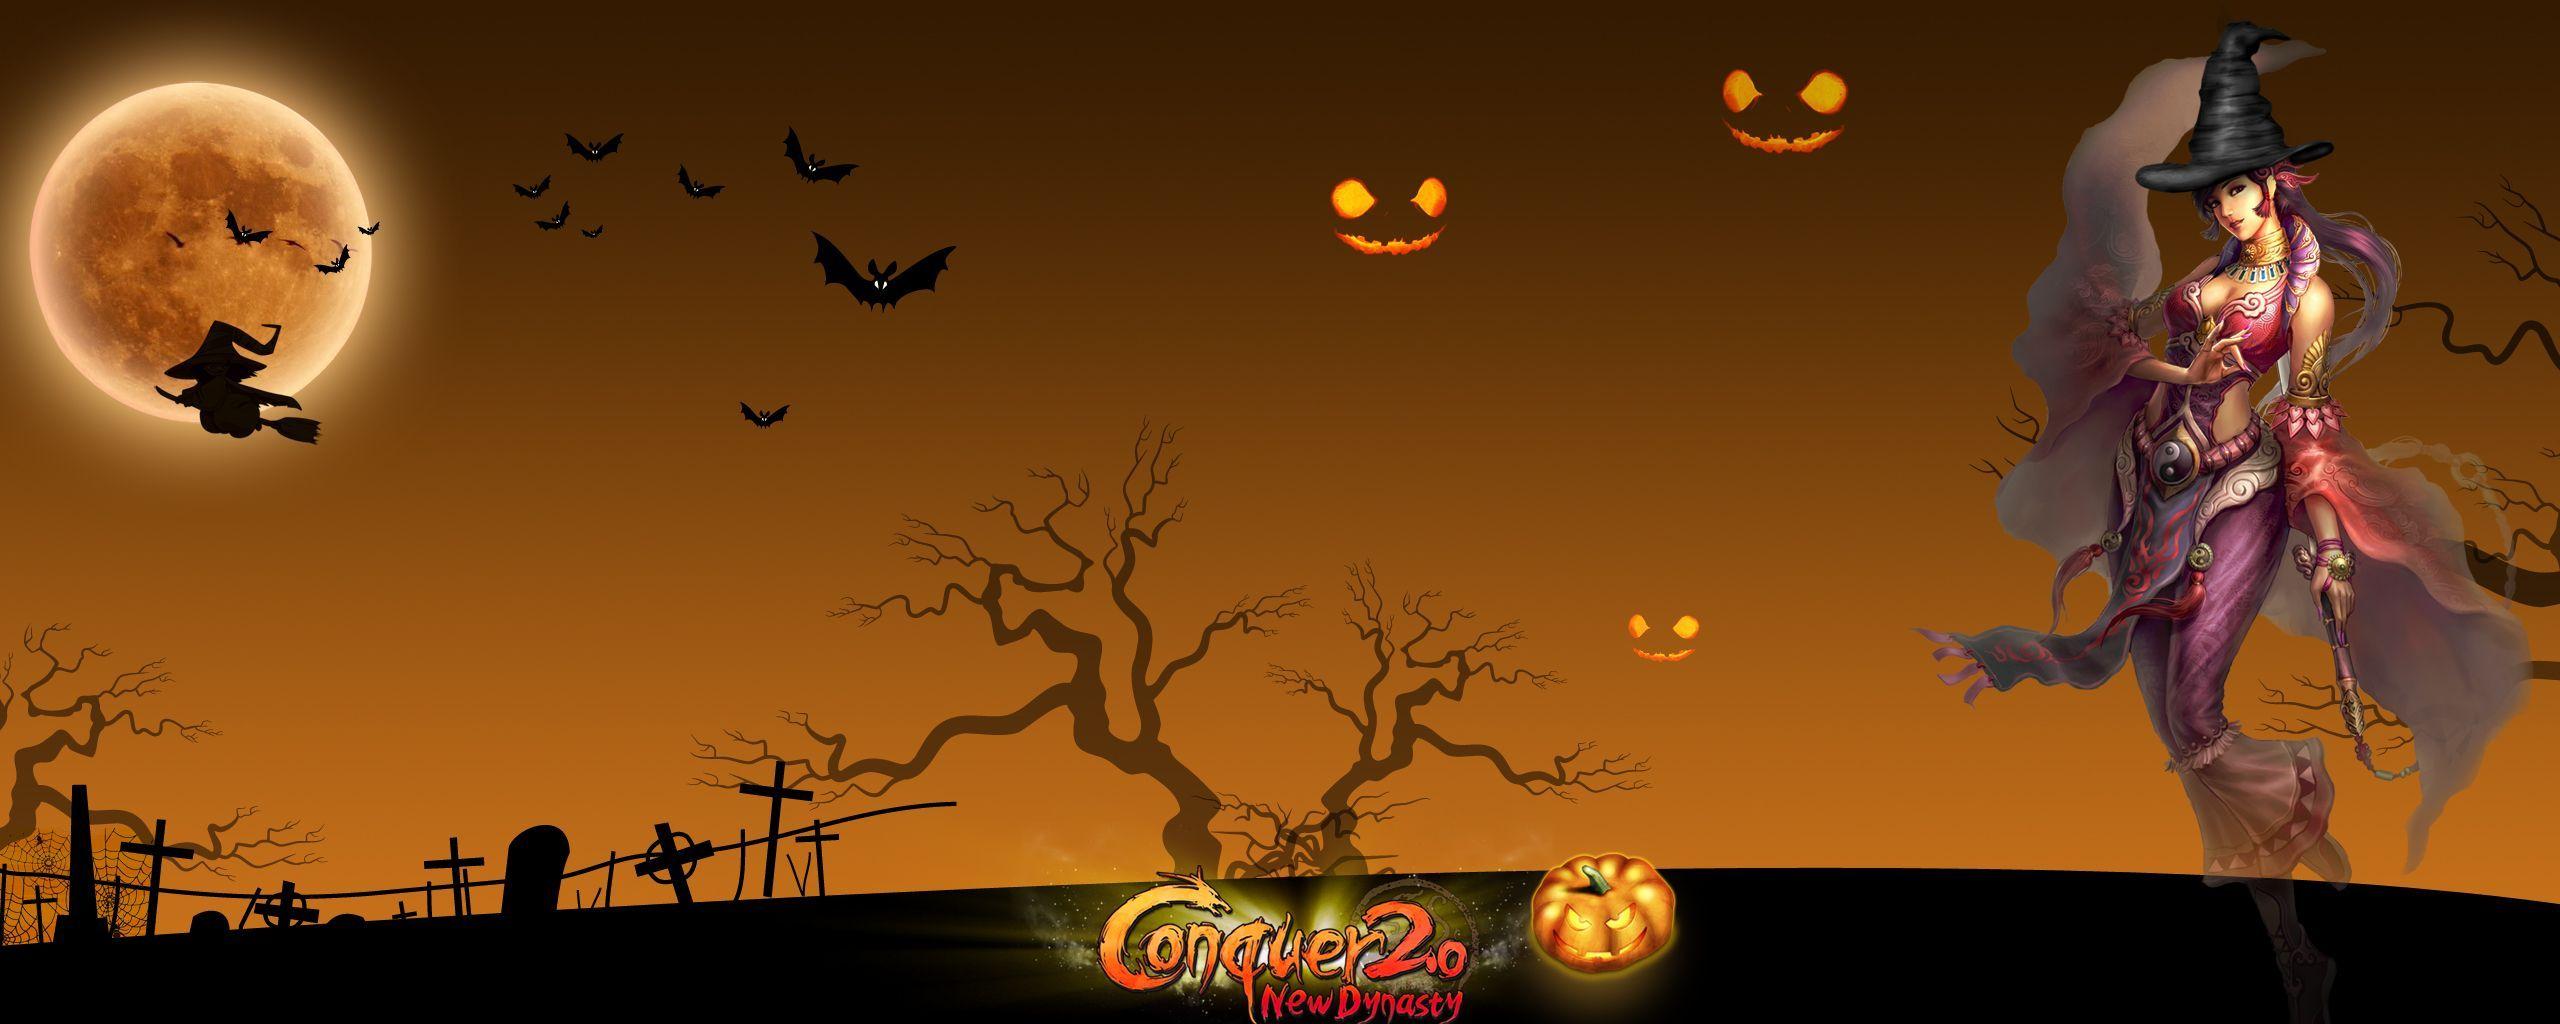 Dual Monitor Halloween Desktop Wallpaper